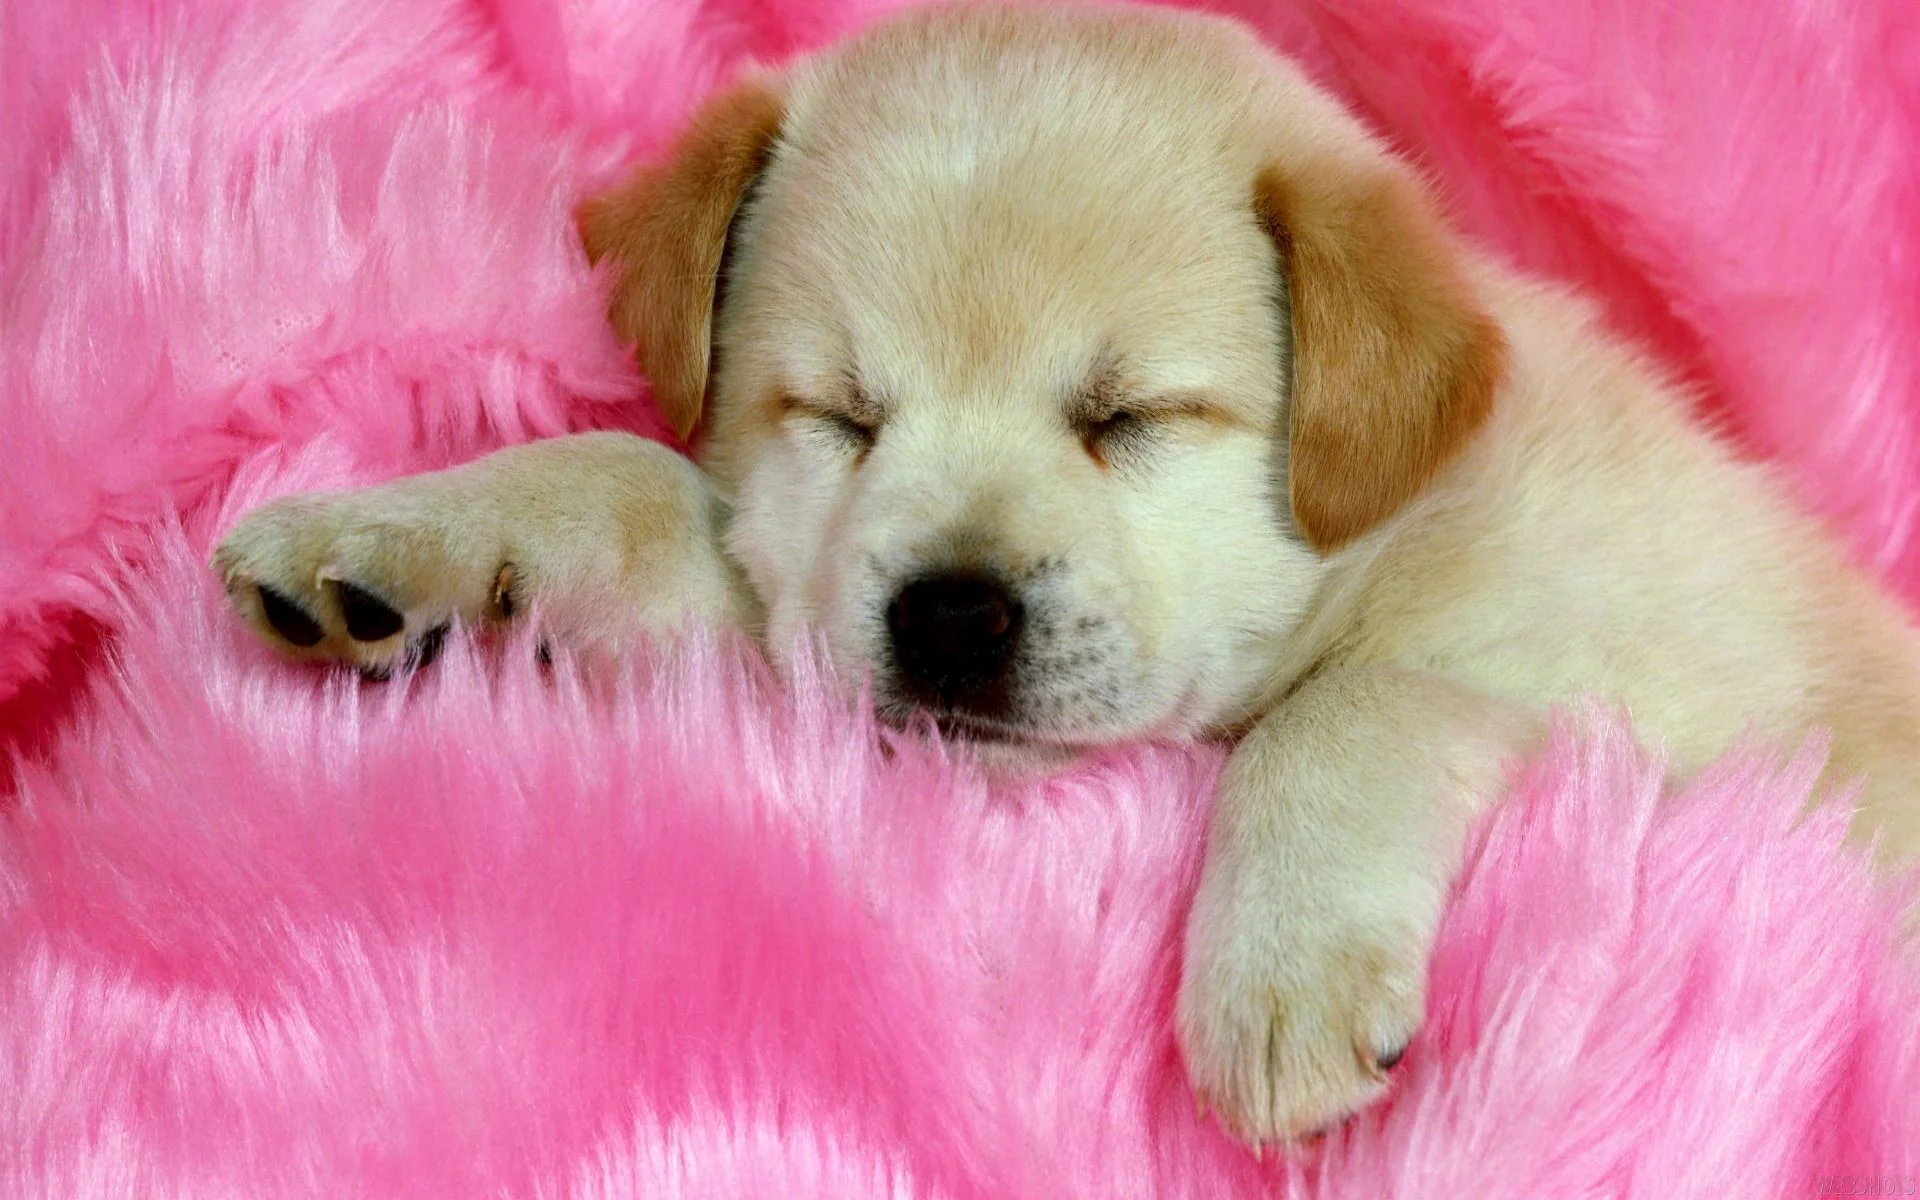 Super Cute Baby Puppies Sleeping – wallpaper.